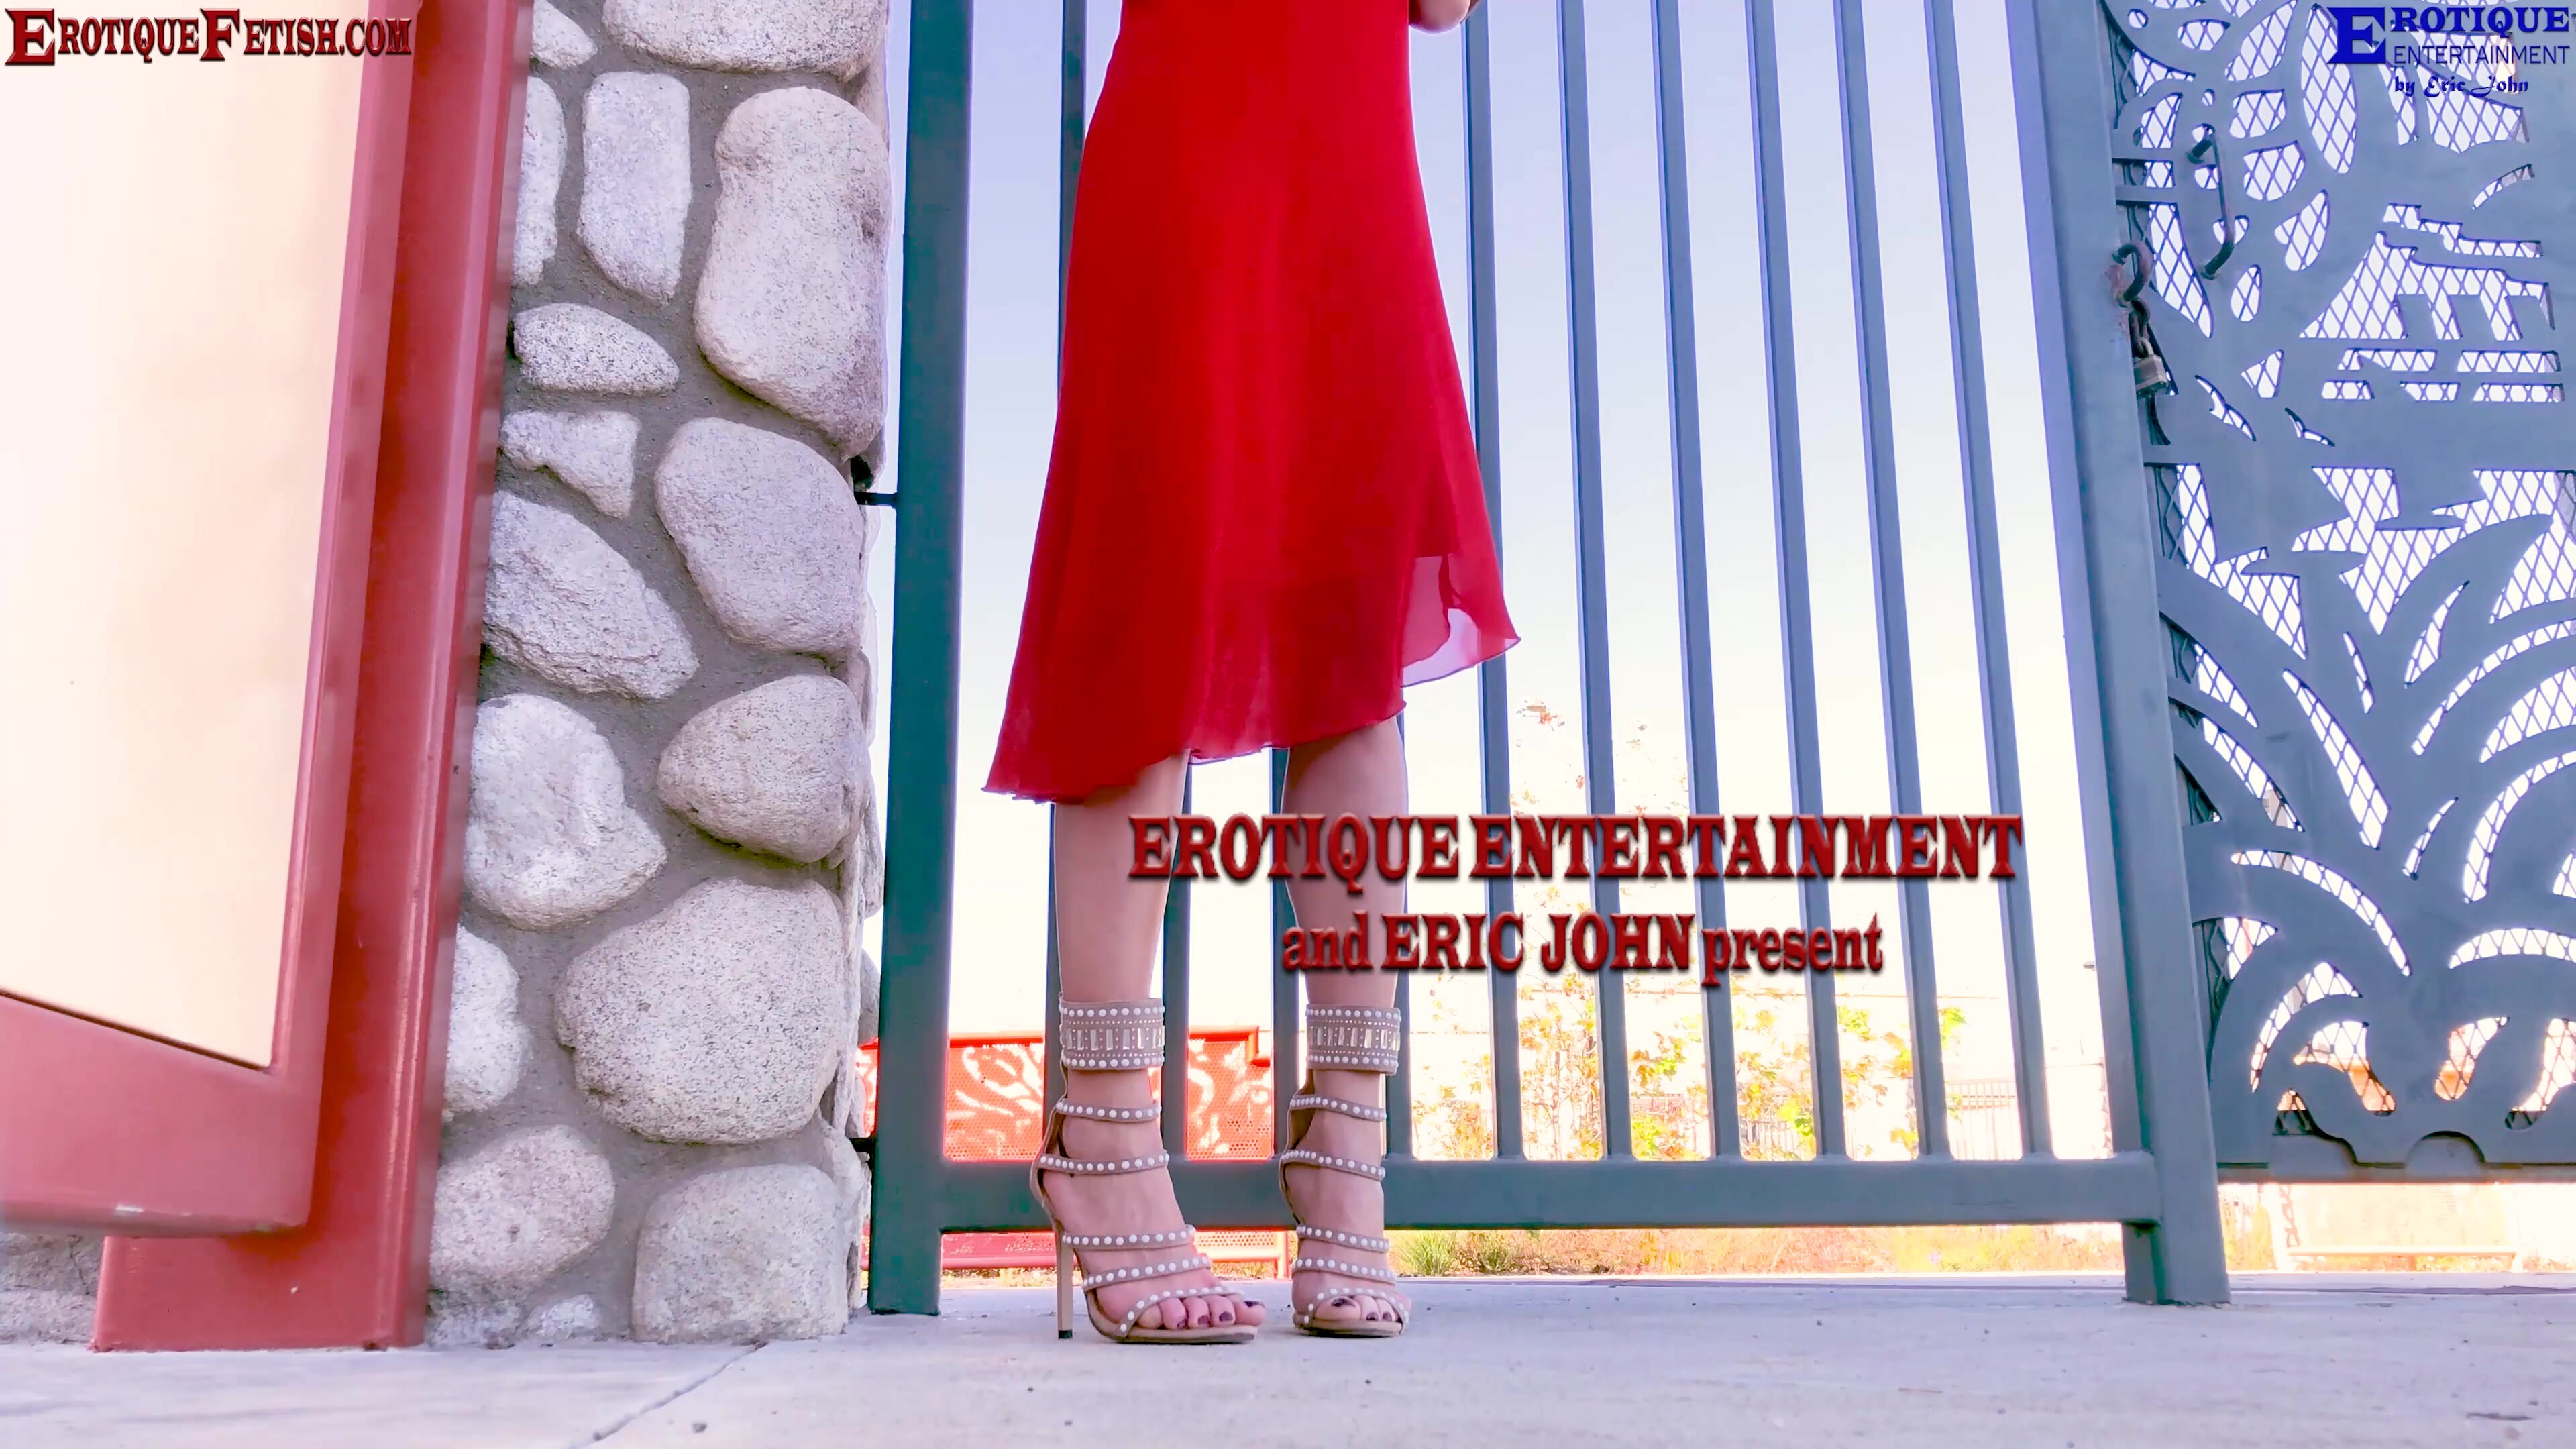 Erotique Entertainment - "Red dress outdoor cum showers